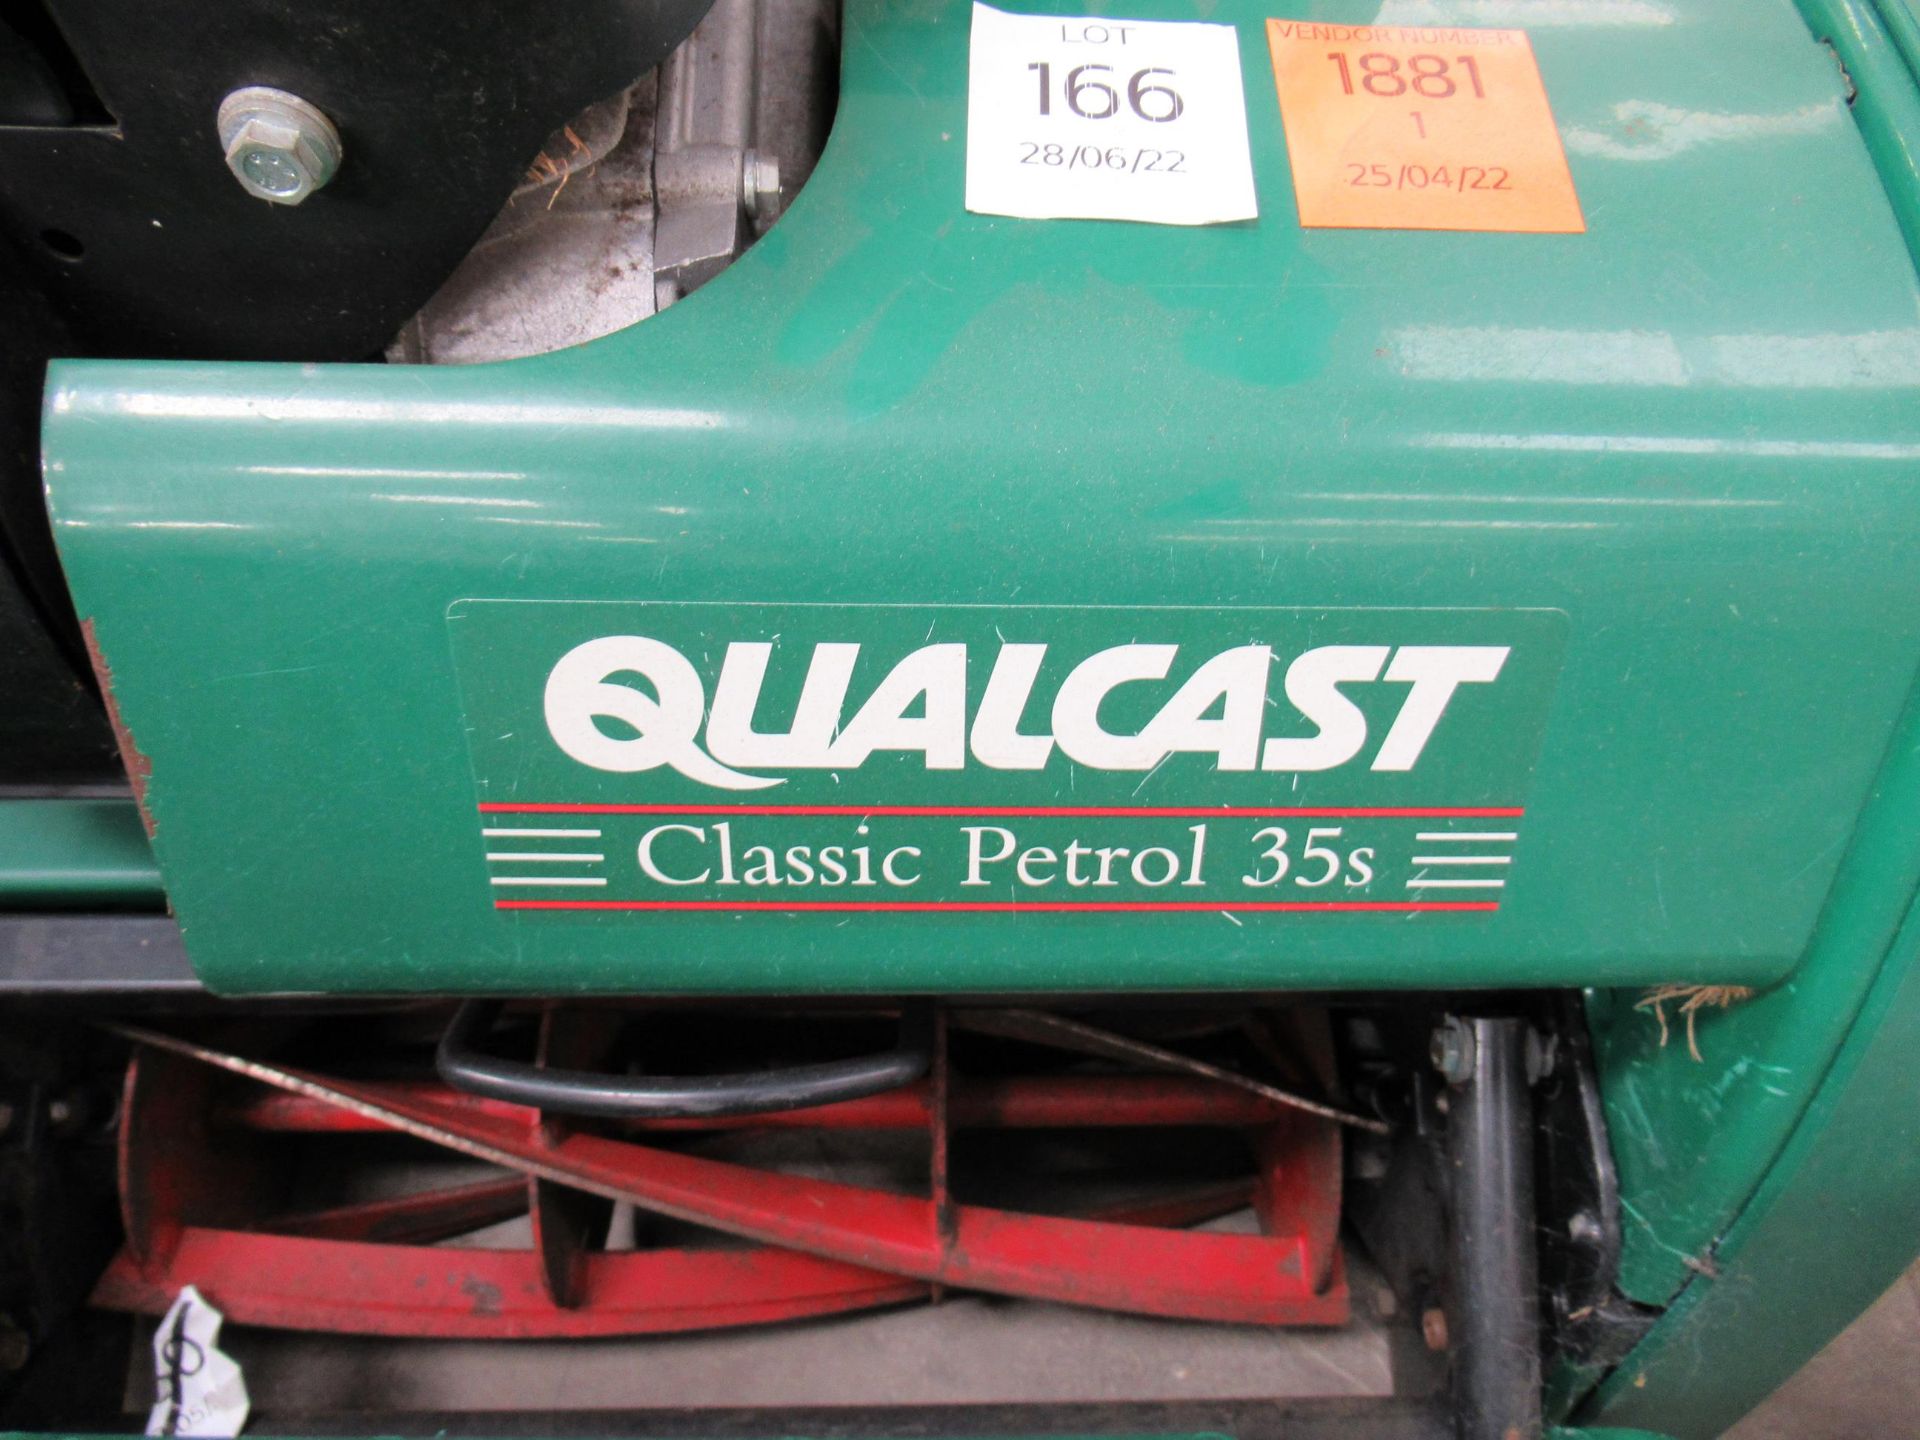 A QualCast Classic Petrol 35s Mower - Image 2 of 3